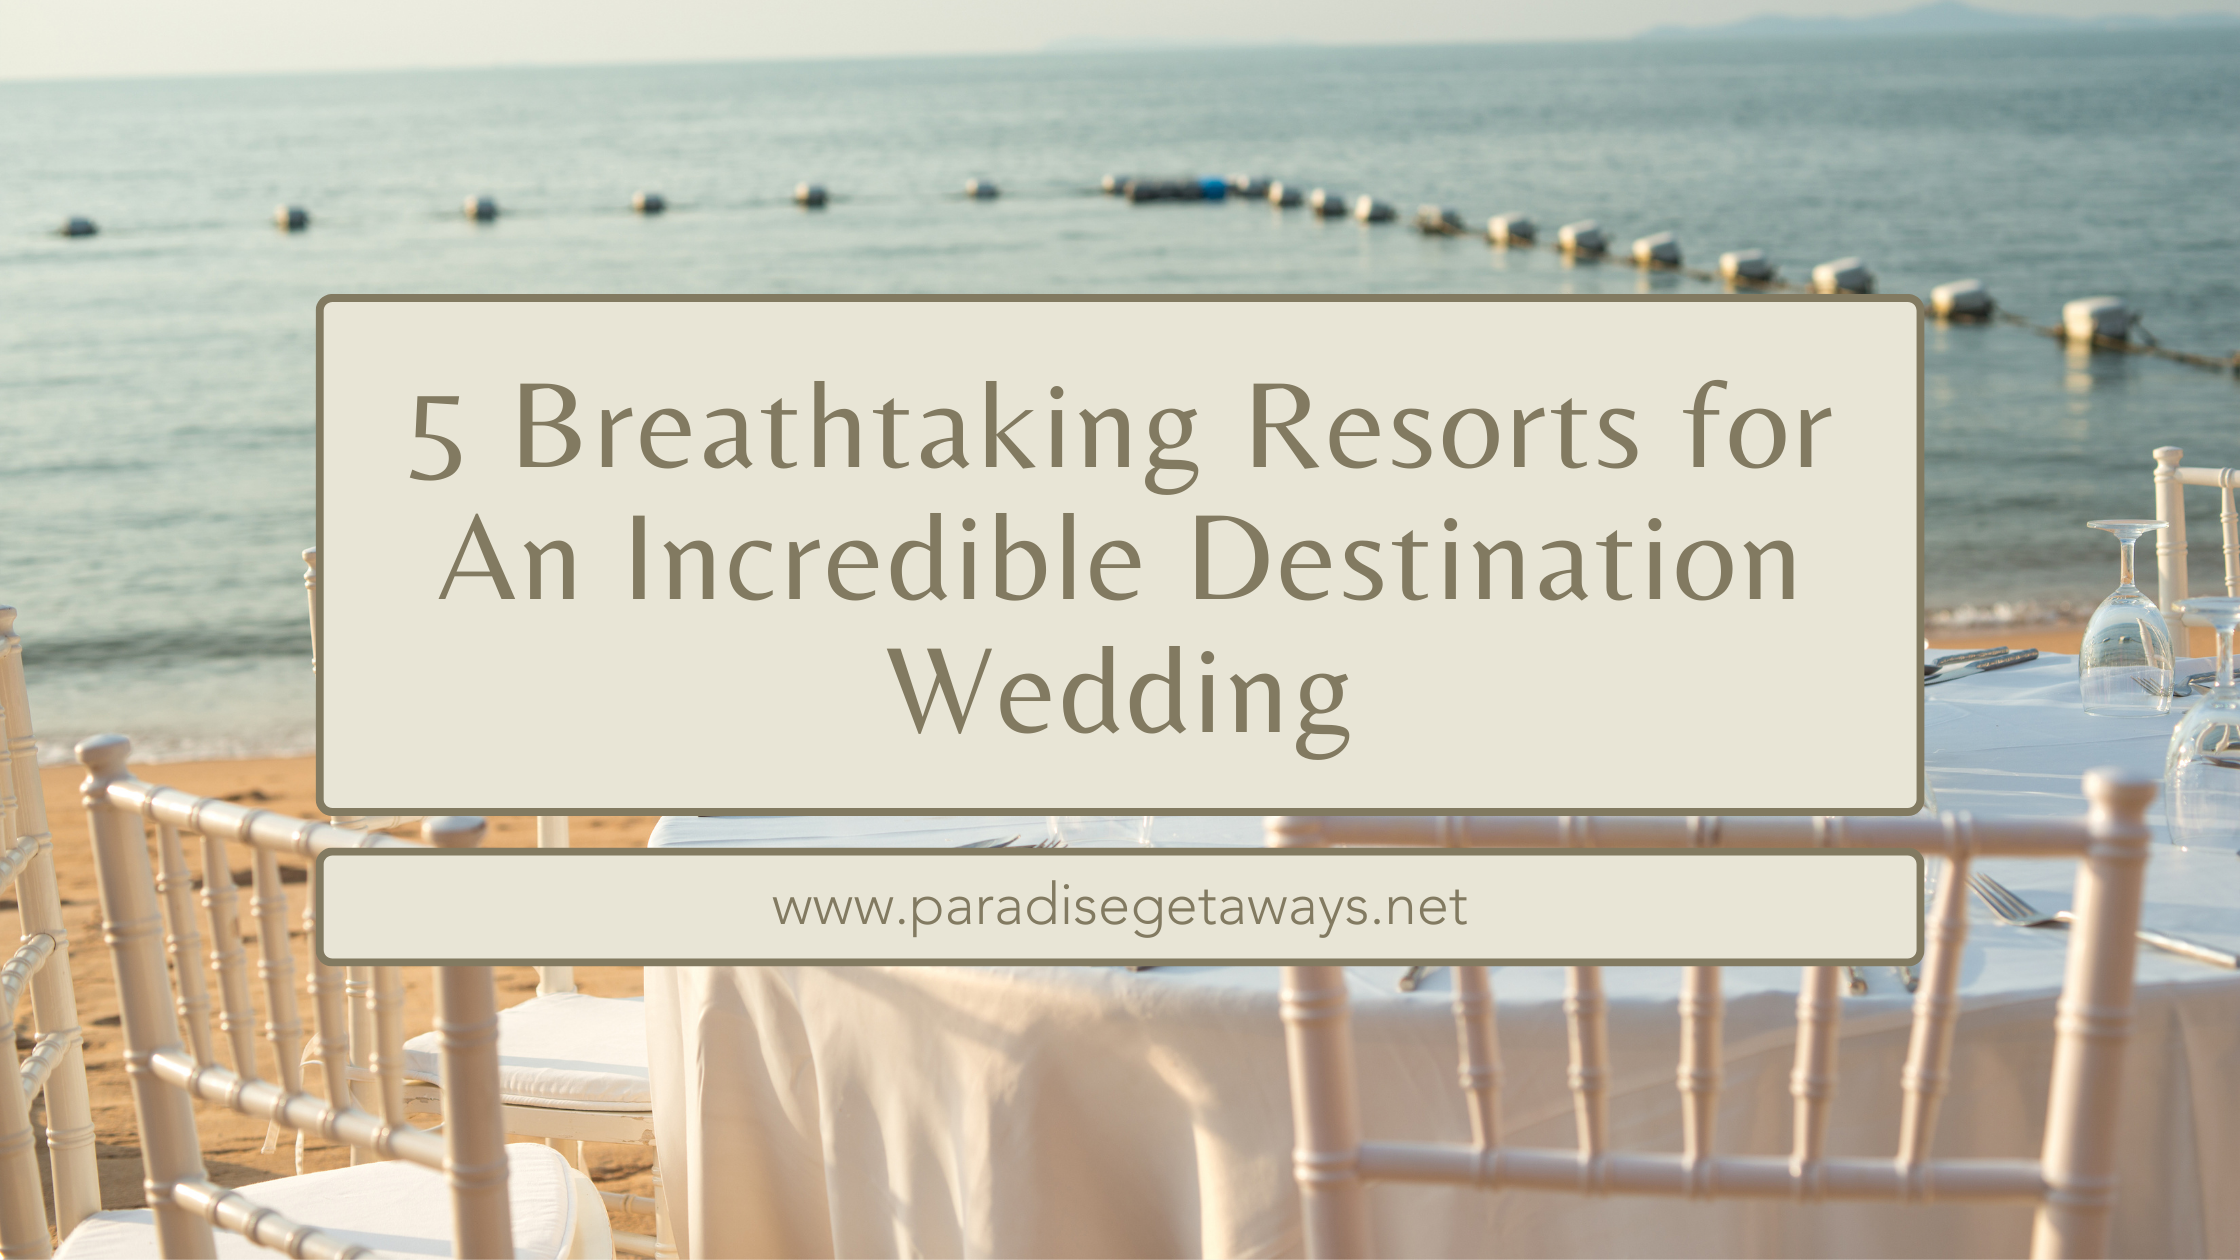 5 Breathtaking Resorts for An Incredible Destination Wedding